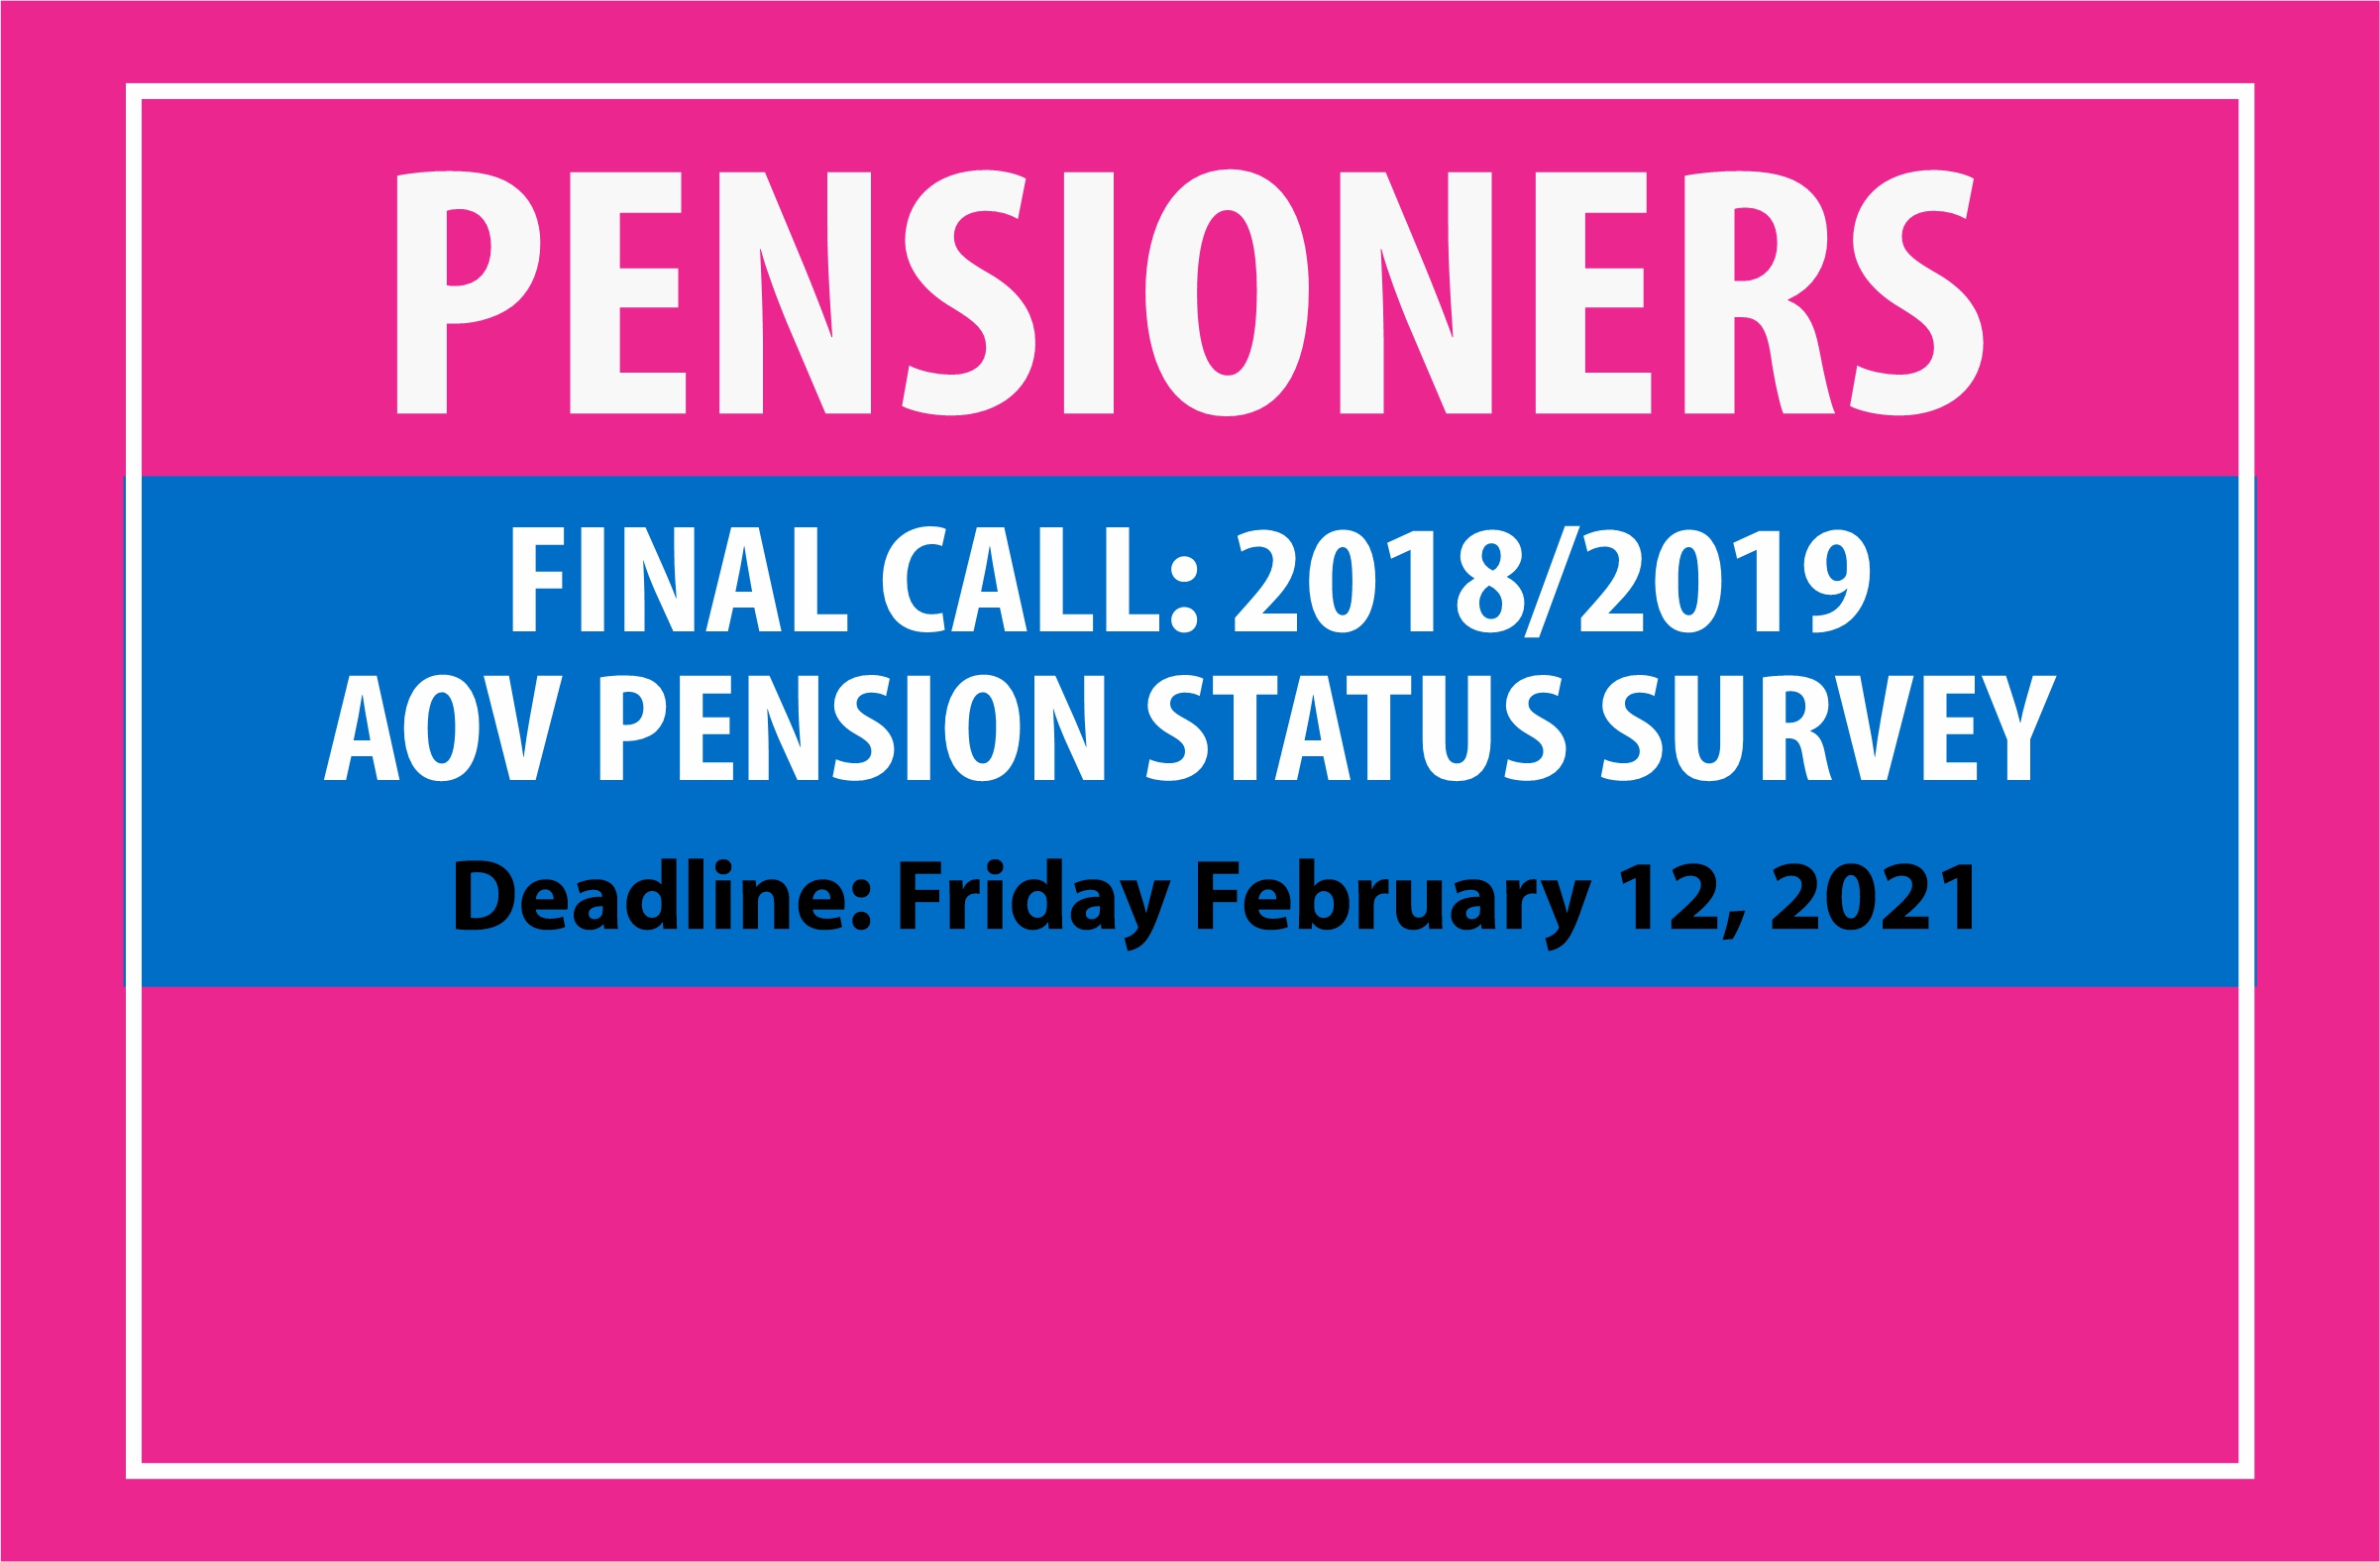 Final call: 2018/2019 AOV Pension Status Survey 